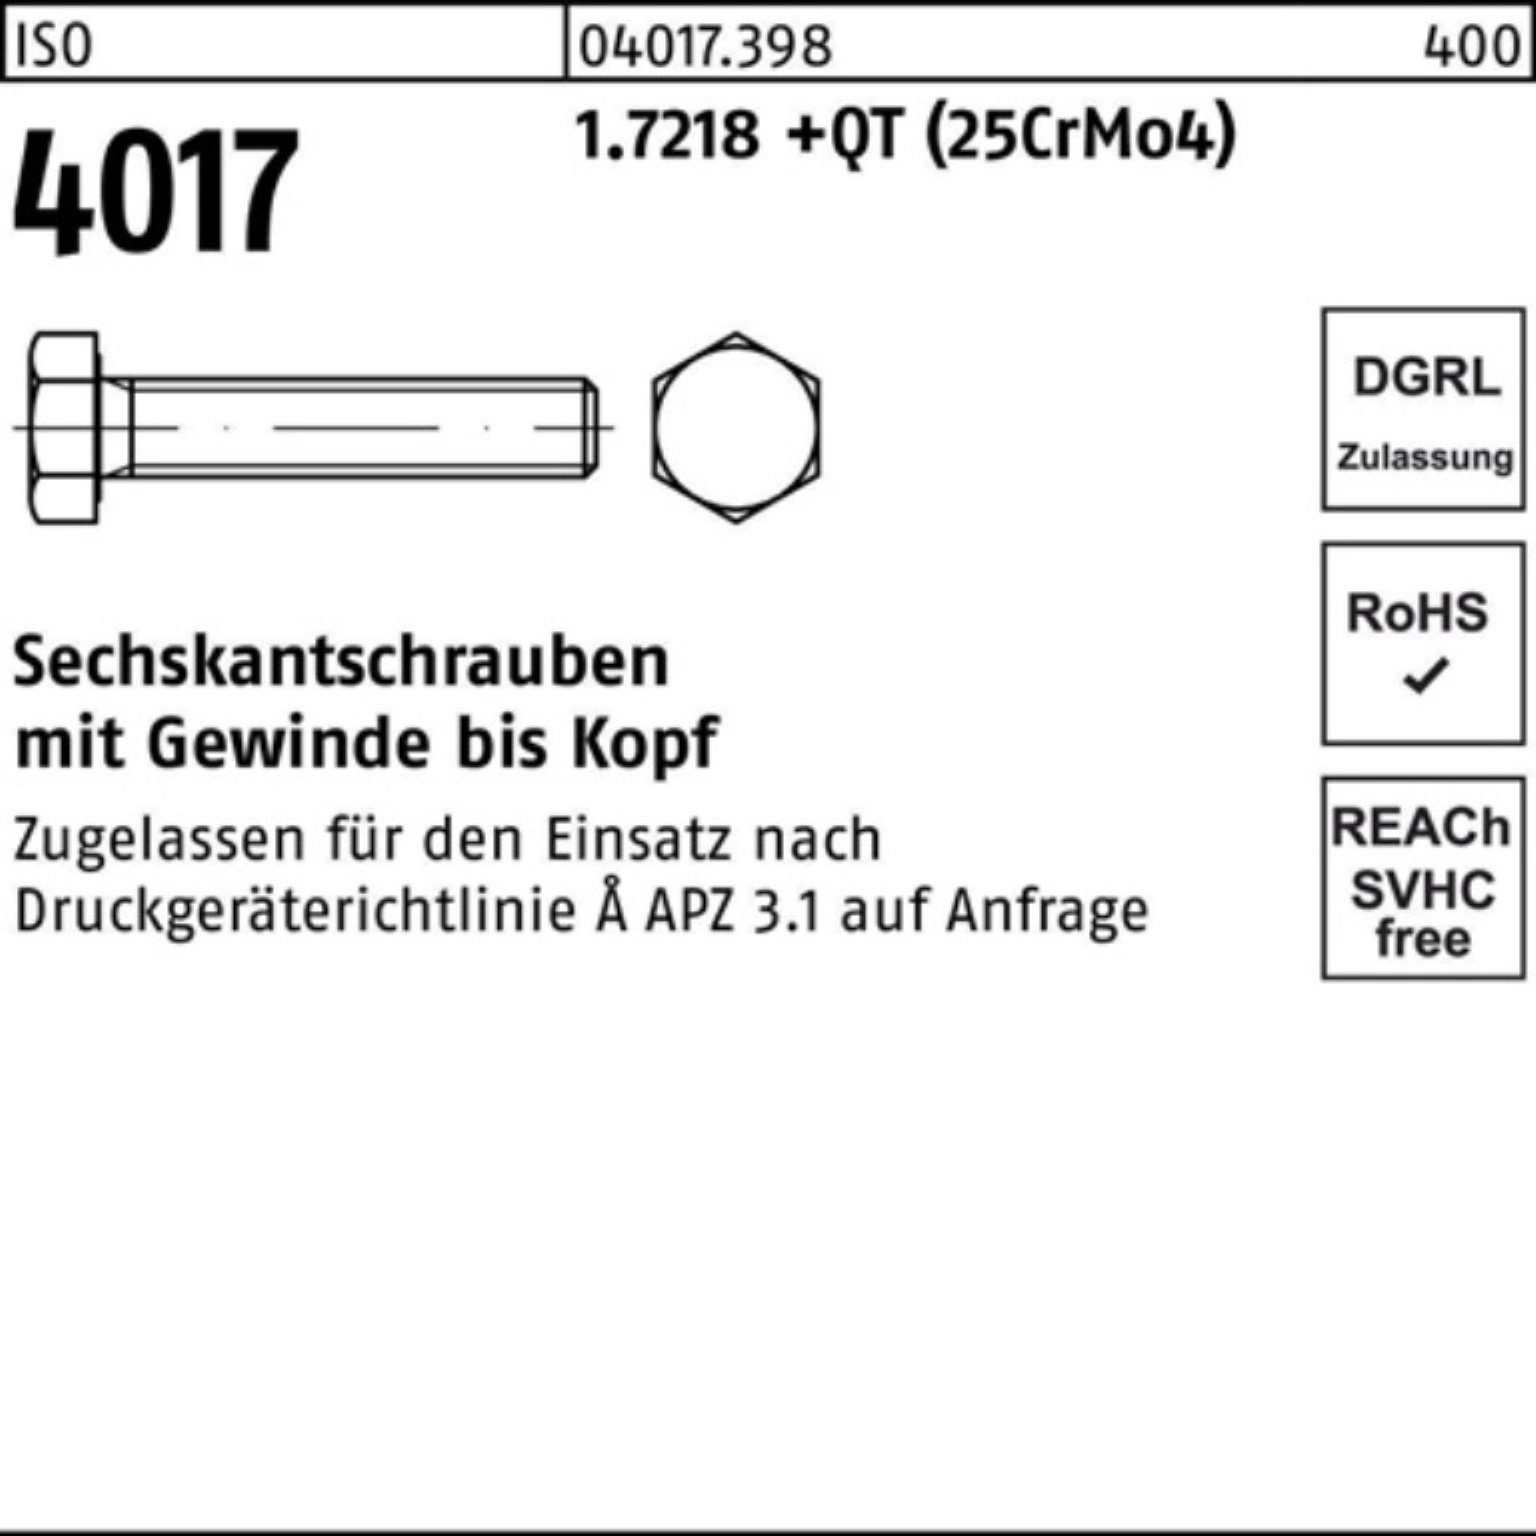 Pack 4017 100er M24x VG (25CrMo4) +QT 1.7218 ISO 35 Sechskantschraube Sechskantschraube Bufab